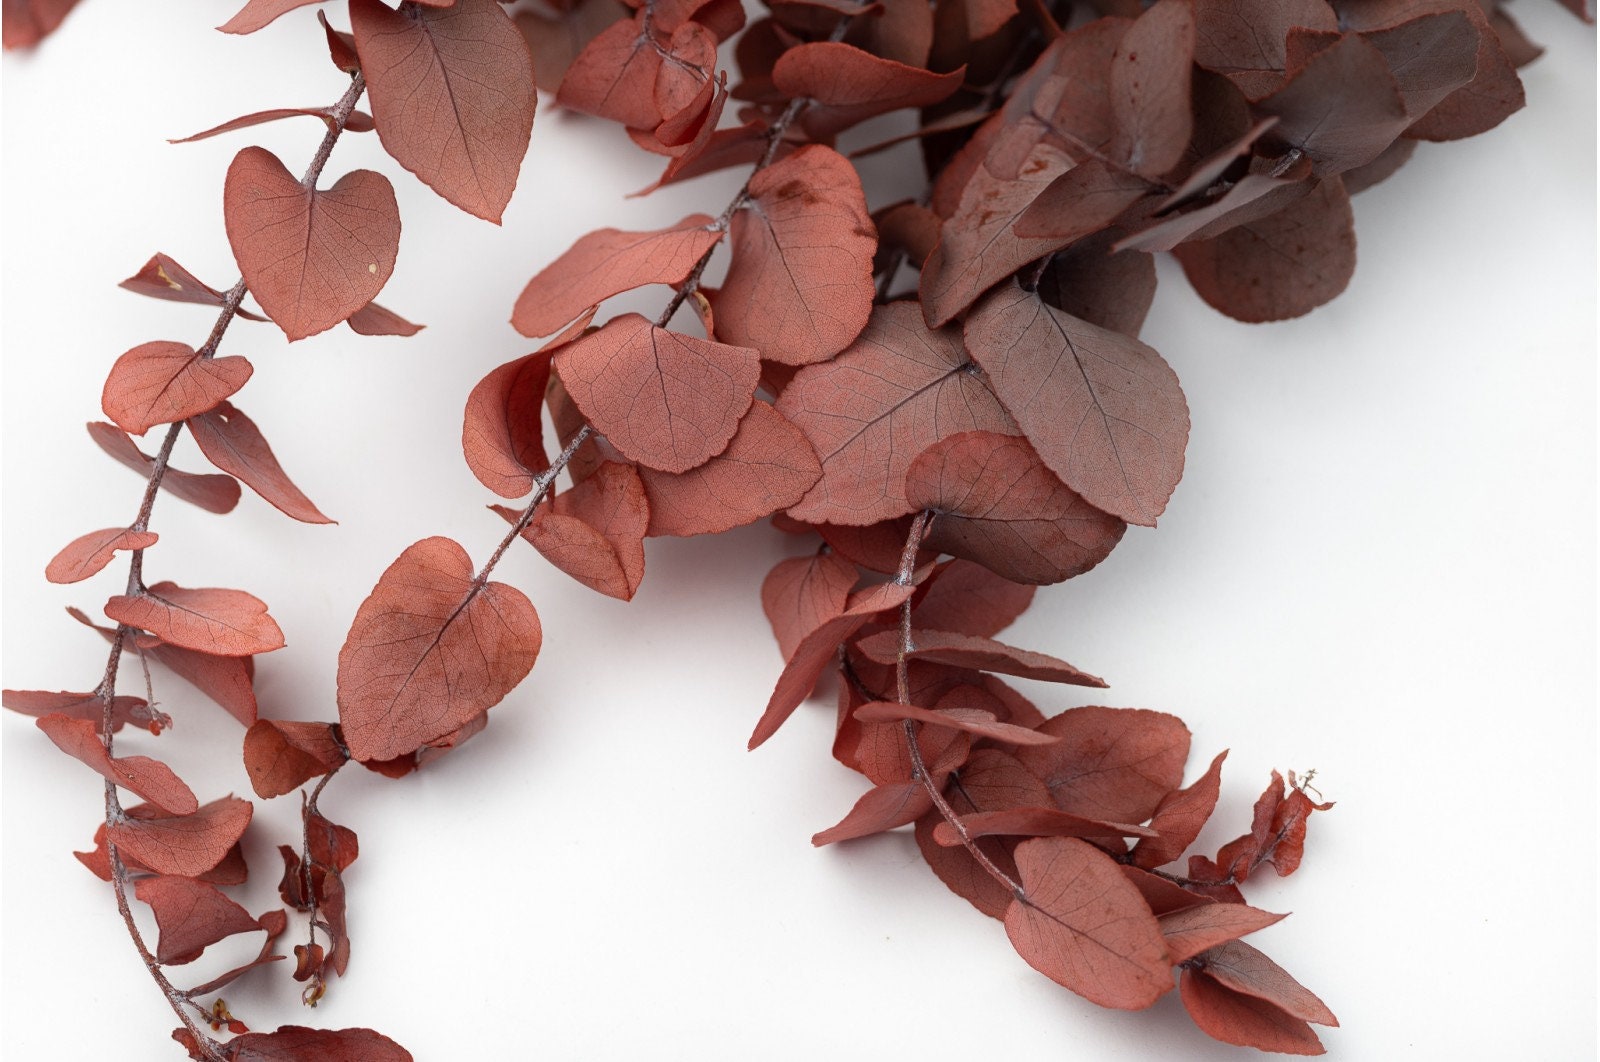 Preserved eucalyptus stuartiana red 120g, preserved leaf, preserved foliage